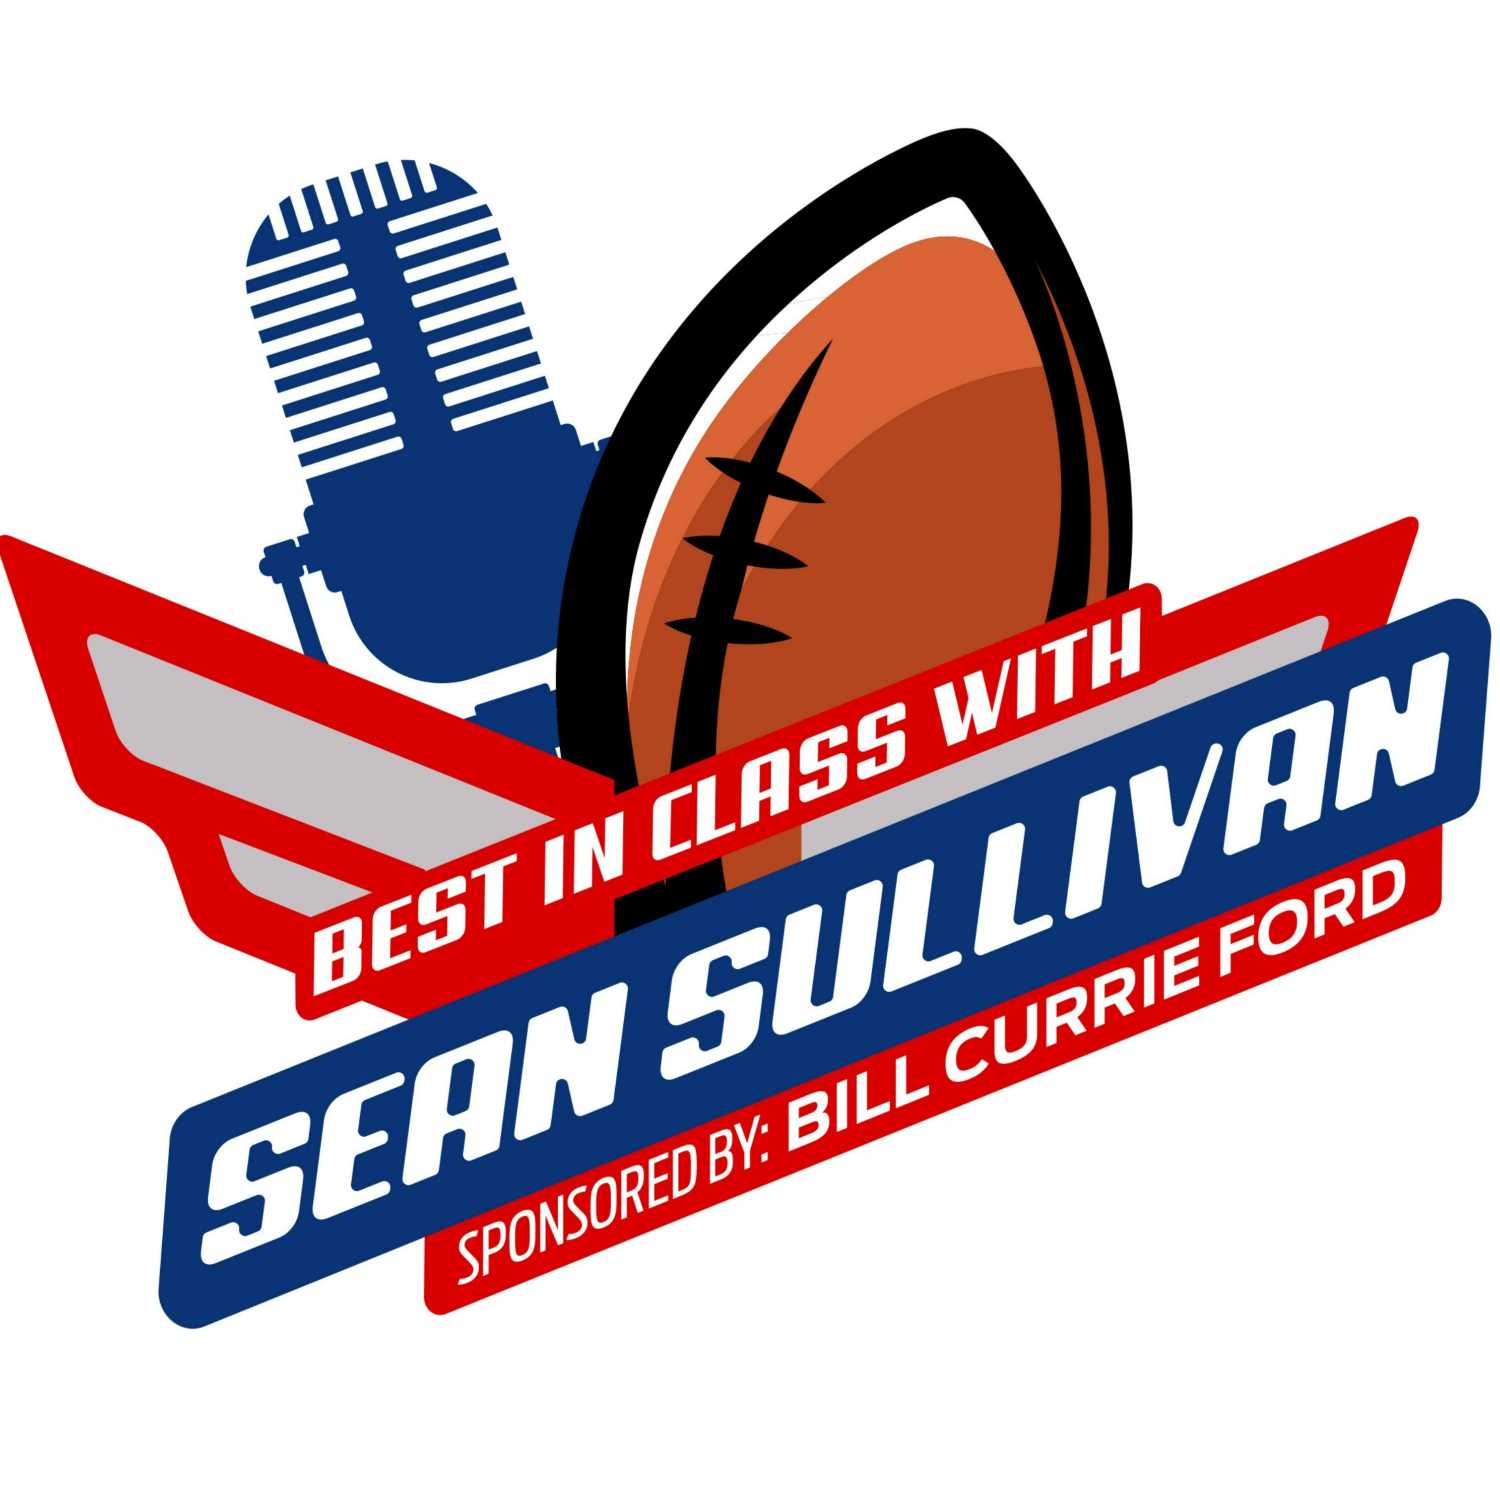 Best In Class Episode 28: Complete Round 1 Mock Draft With Joe & JoeBucsFan Draft Guru Sean Sullivan!